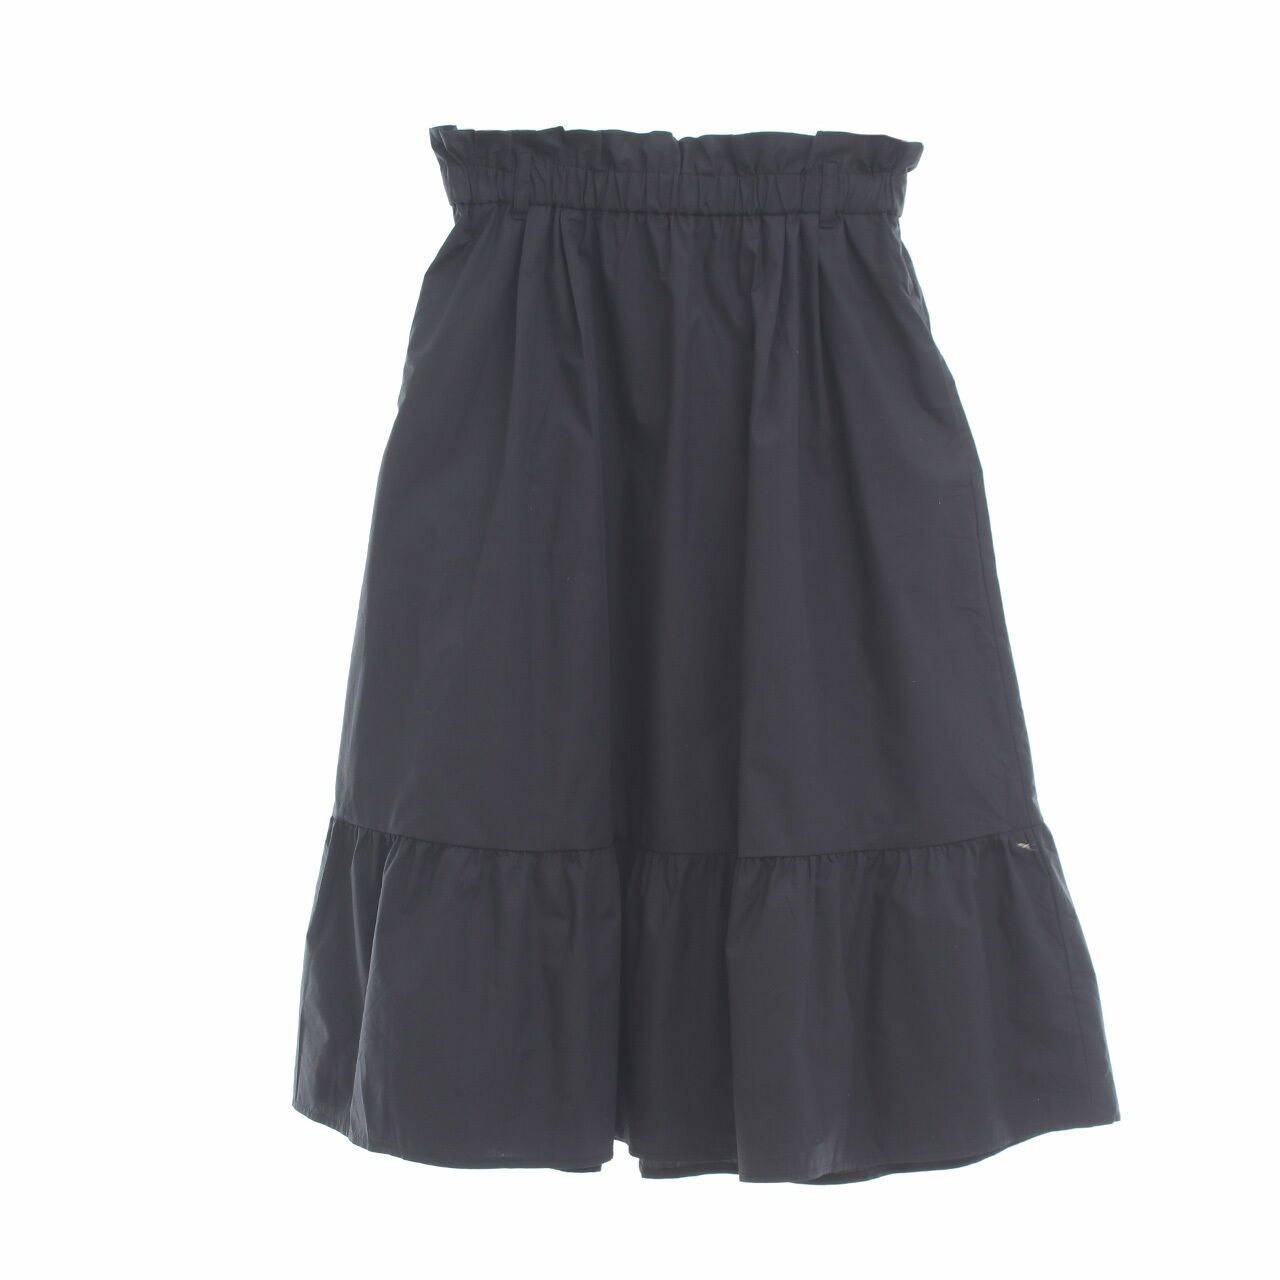 UNIQLO Black Midi Skirt